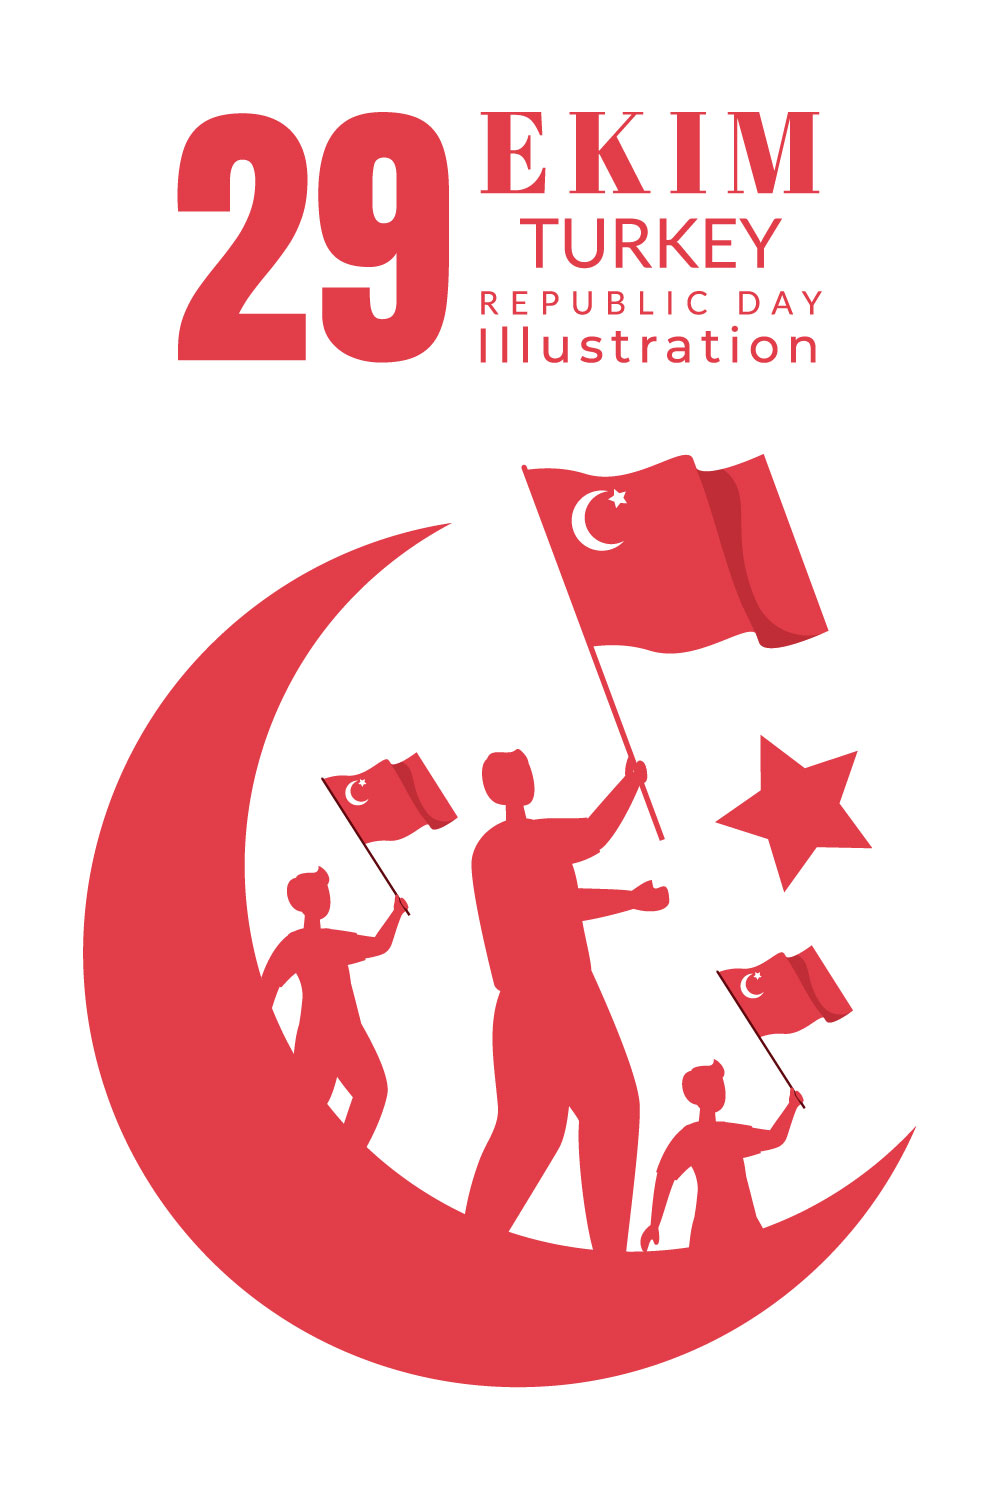 14 Republic Day Turkey Illustration Pinterest Image.